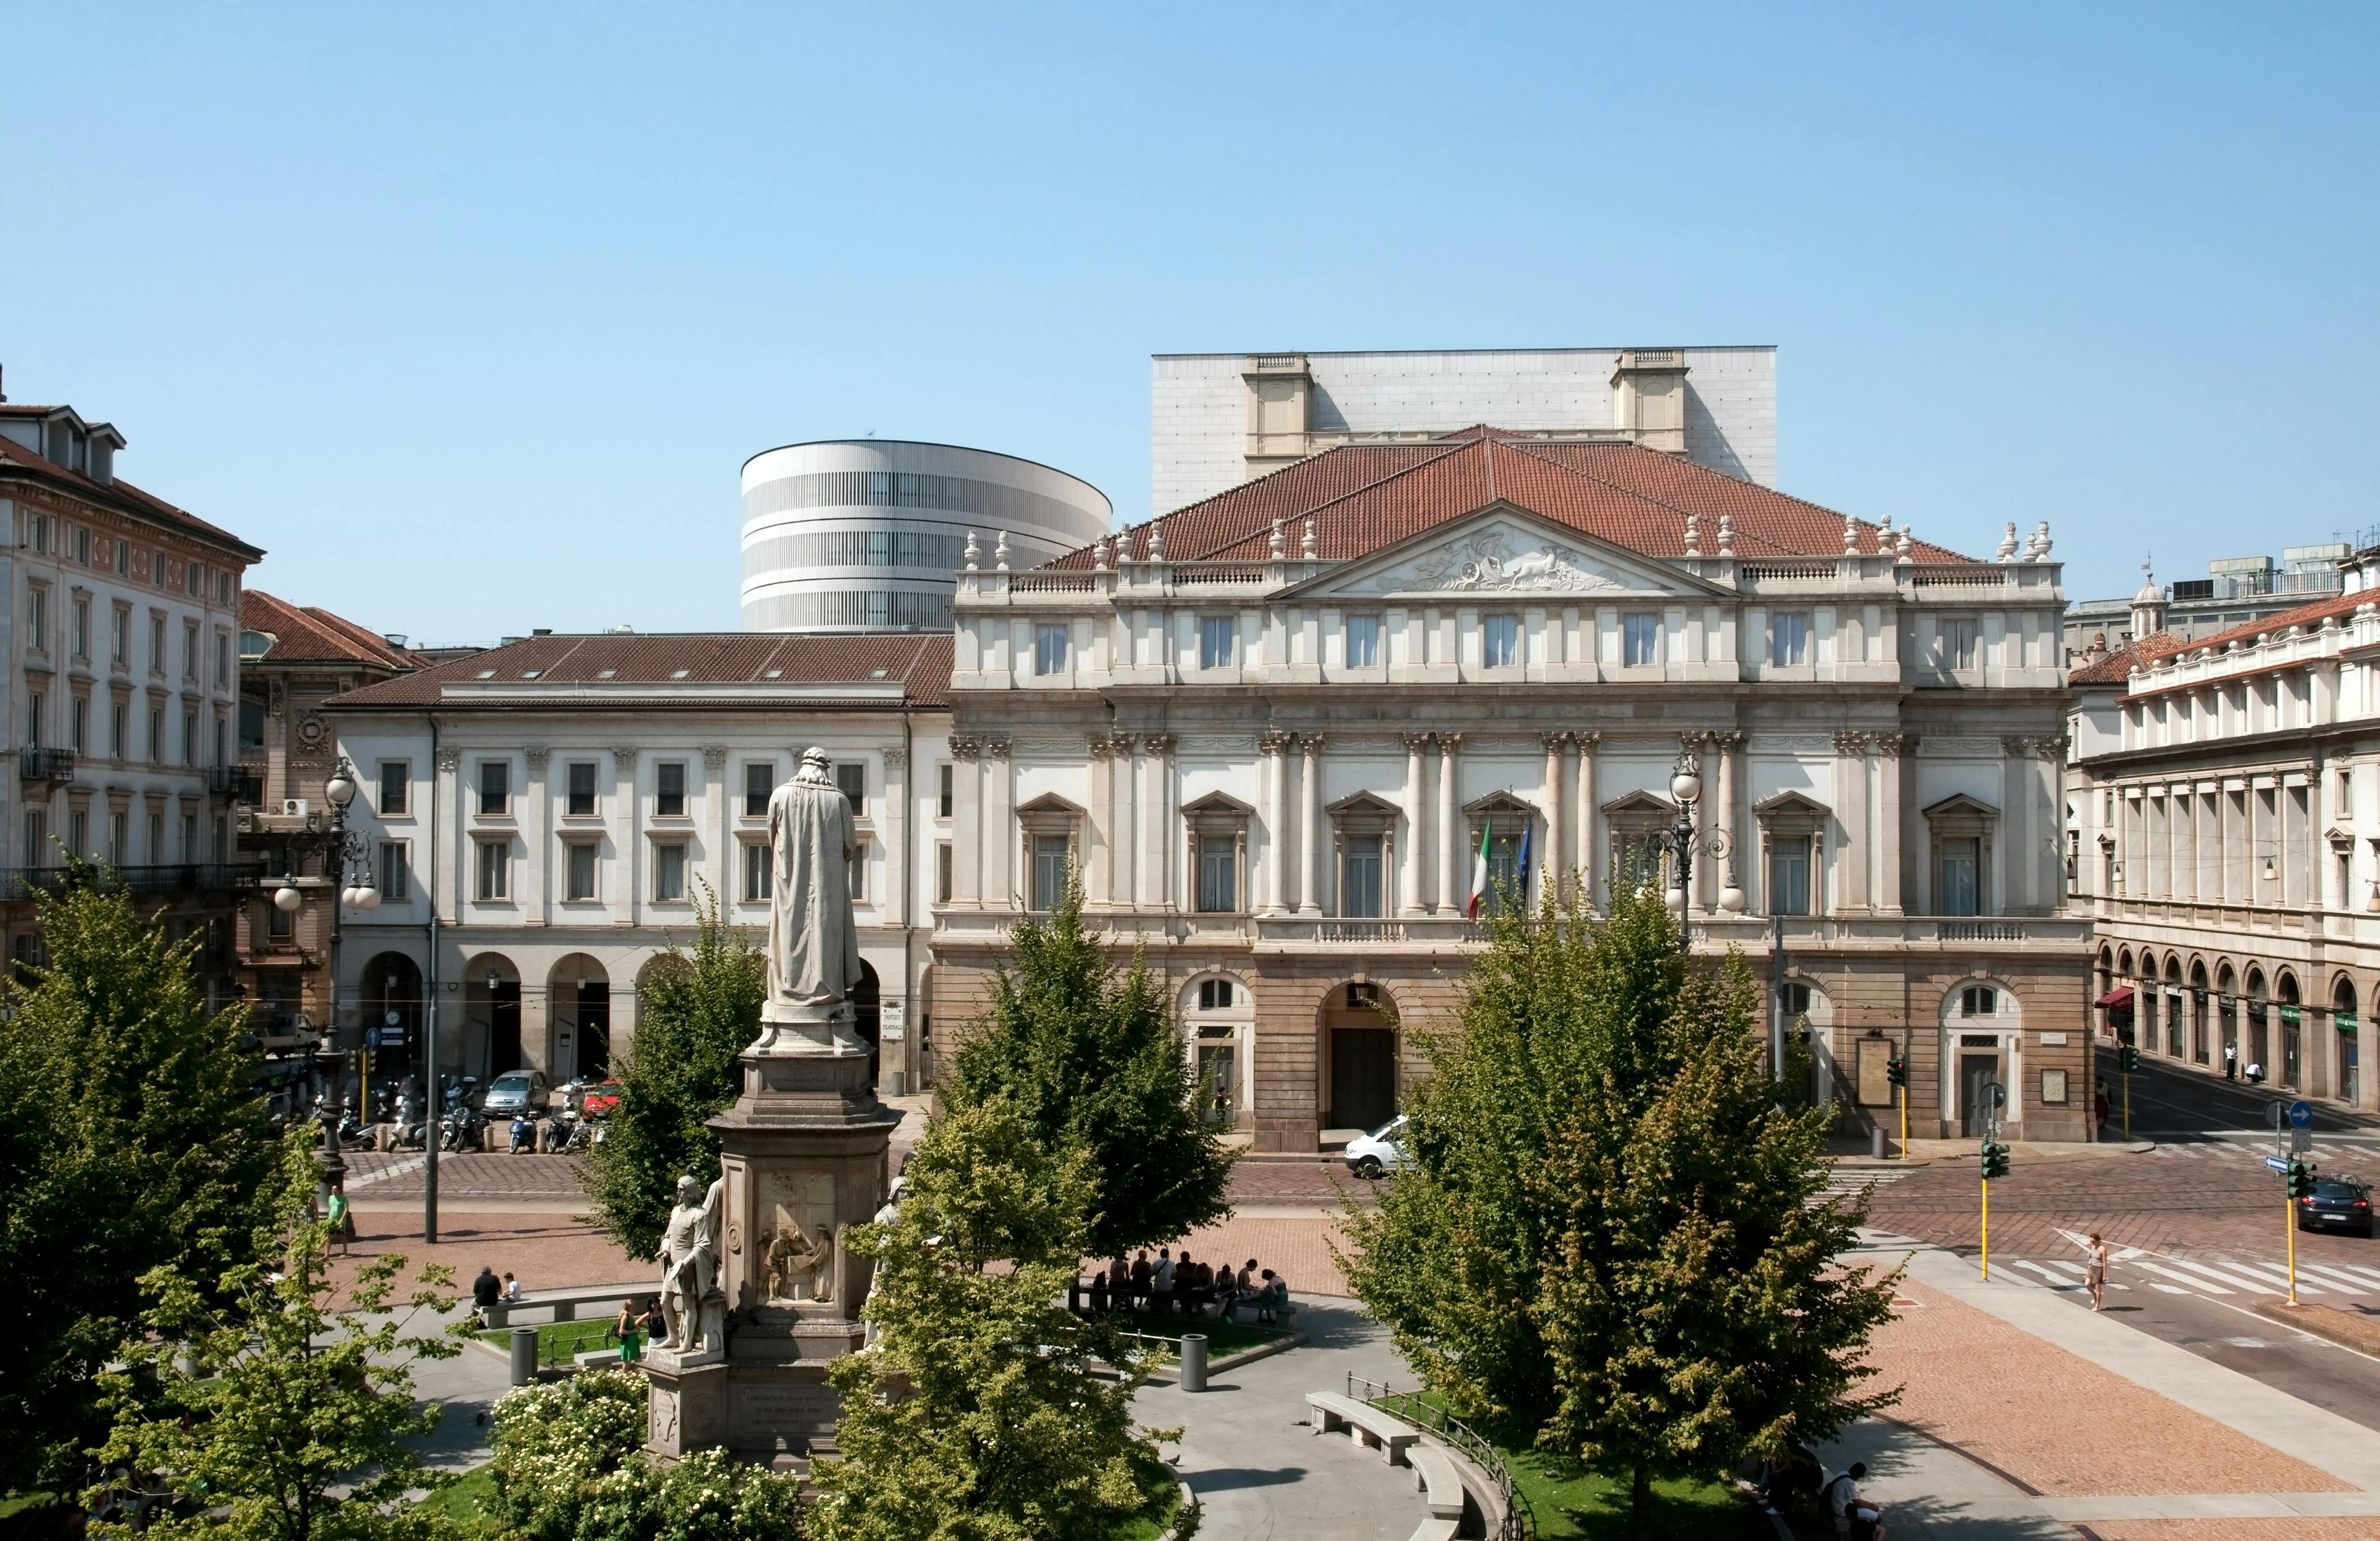 Visita guiada exclusiva por Milão com La Scala, Piazza del Duomo e Galeria Vittorio Emanuele II